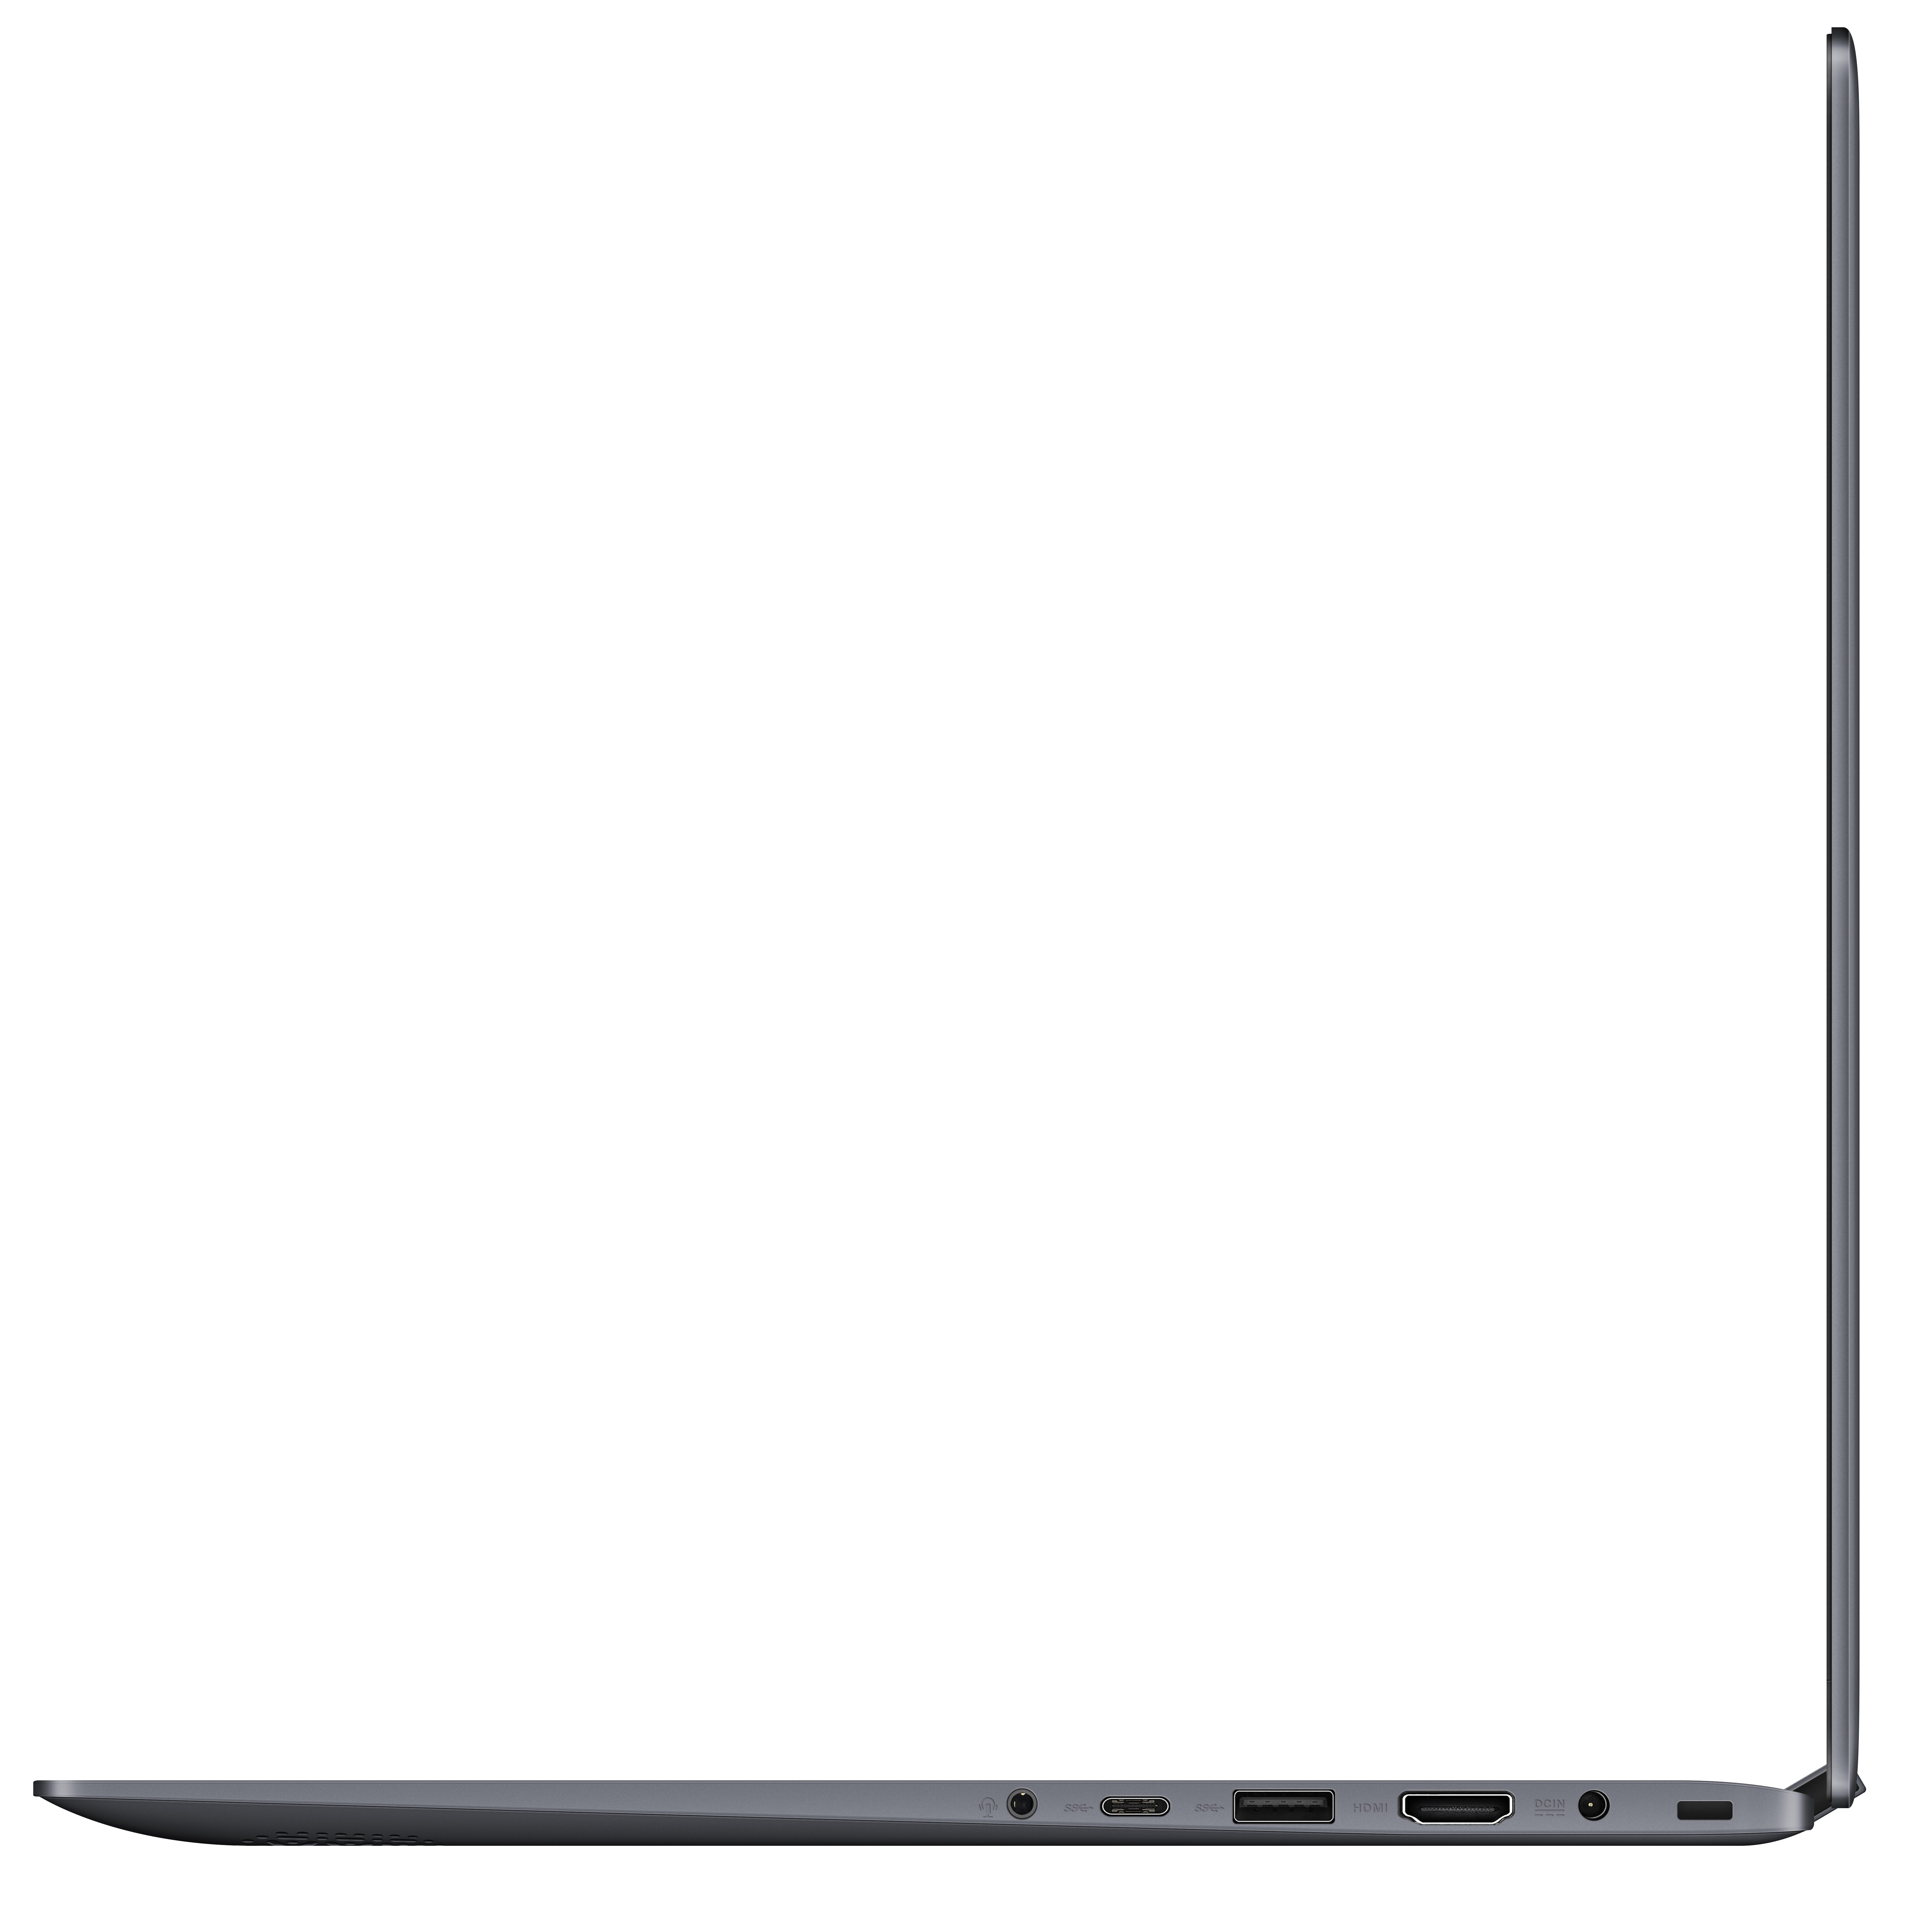 ASUS VivoBook Flip 14 Laptop, 14" FHD Touch, Intel Core i3-10110U, 4GB DDR4, 128GB SSD, Fingerprint, Windows 10 Home in S Mode, Star Gray, TP412FA-WS31T - image 7 of 9